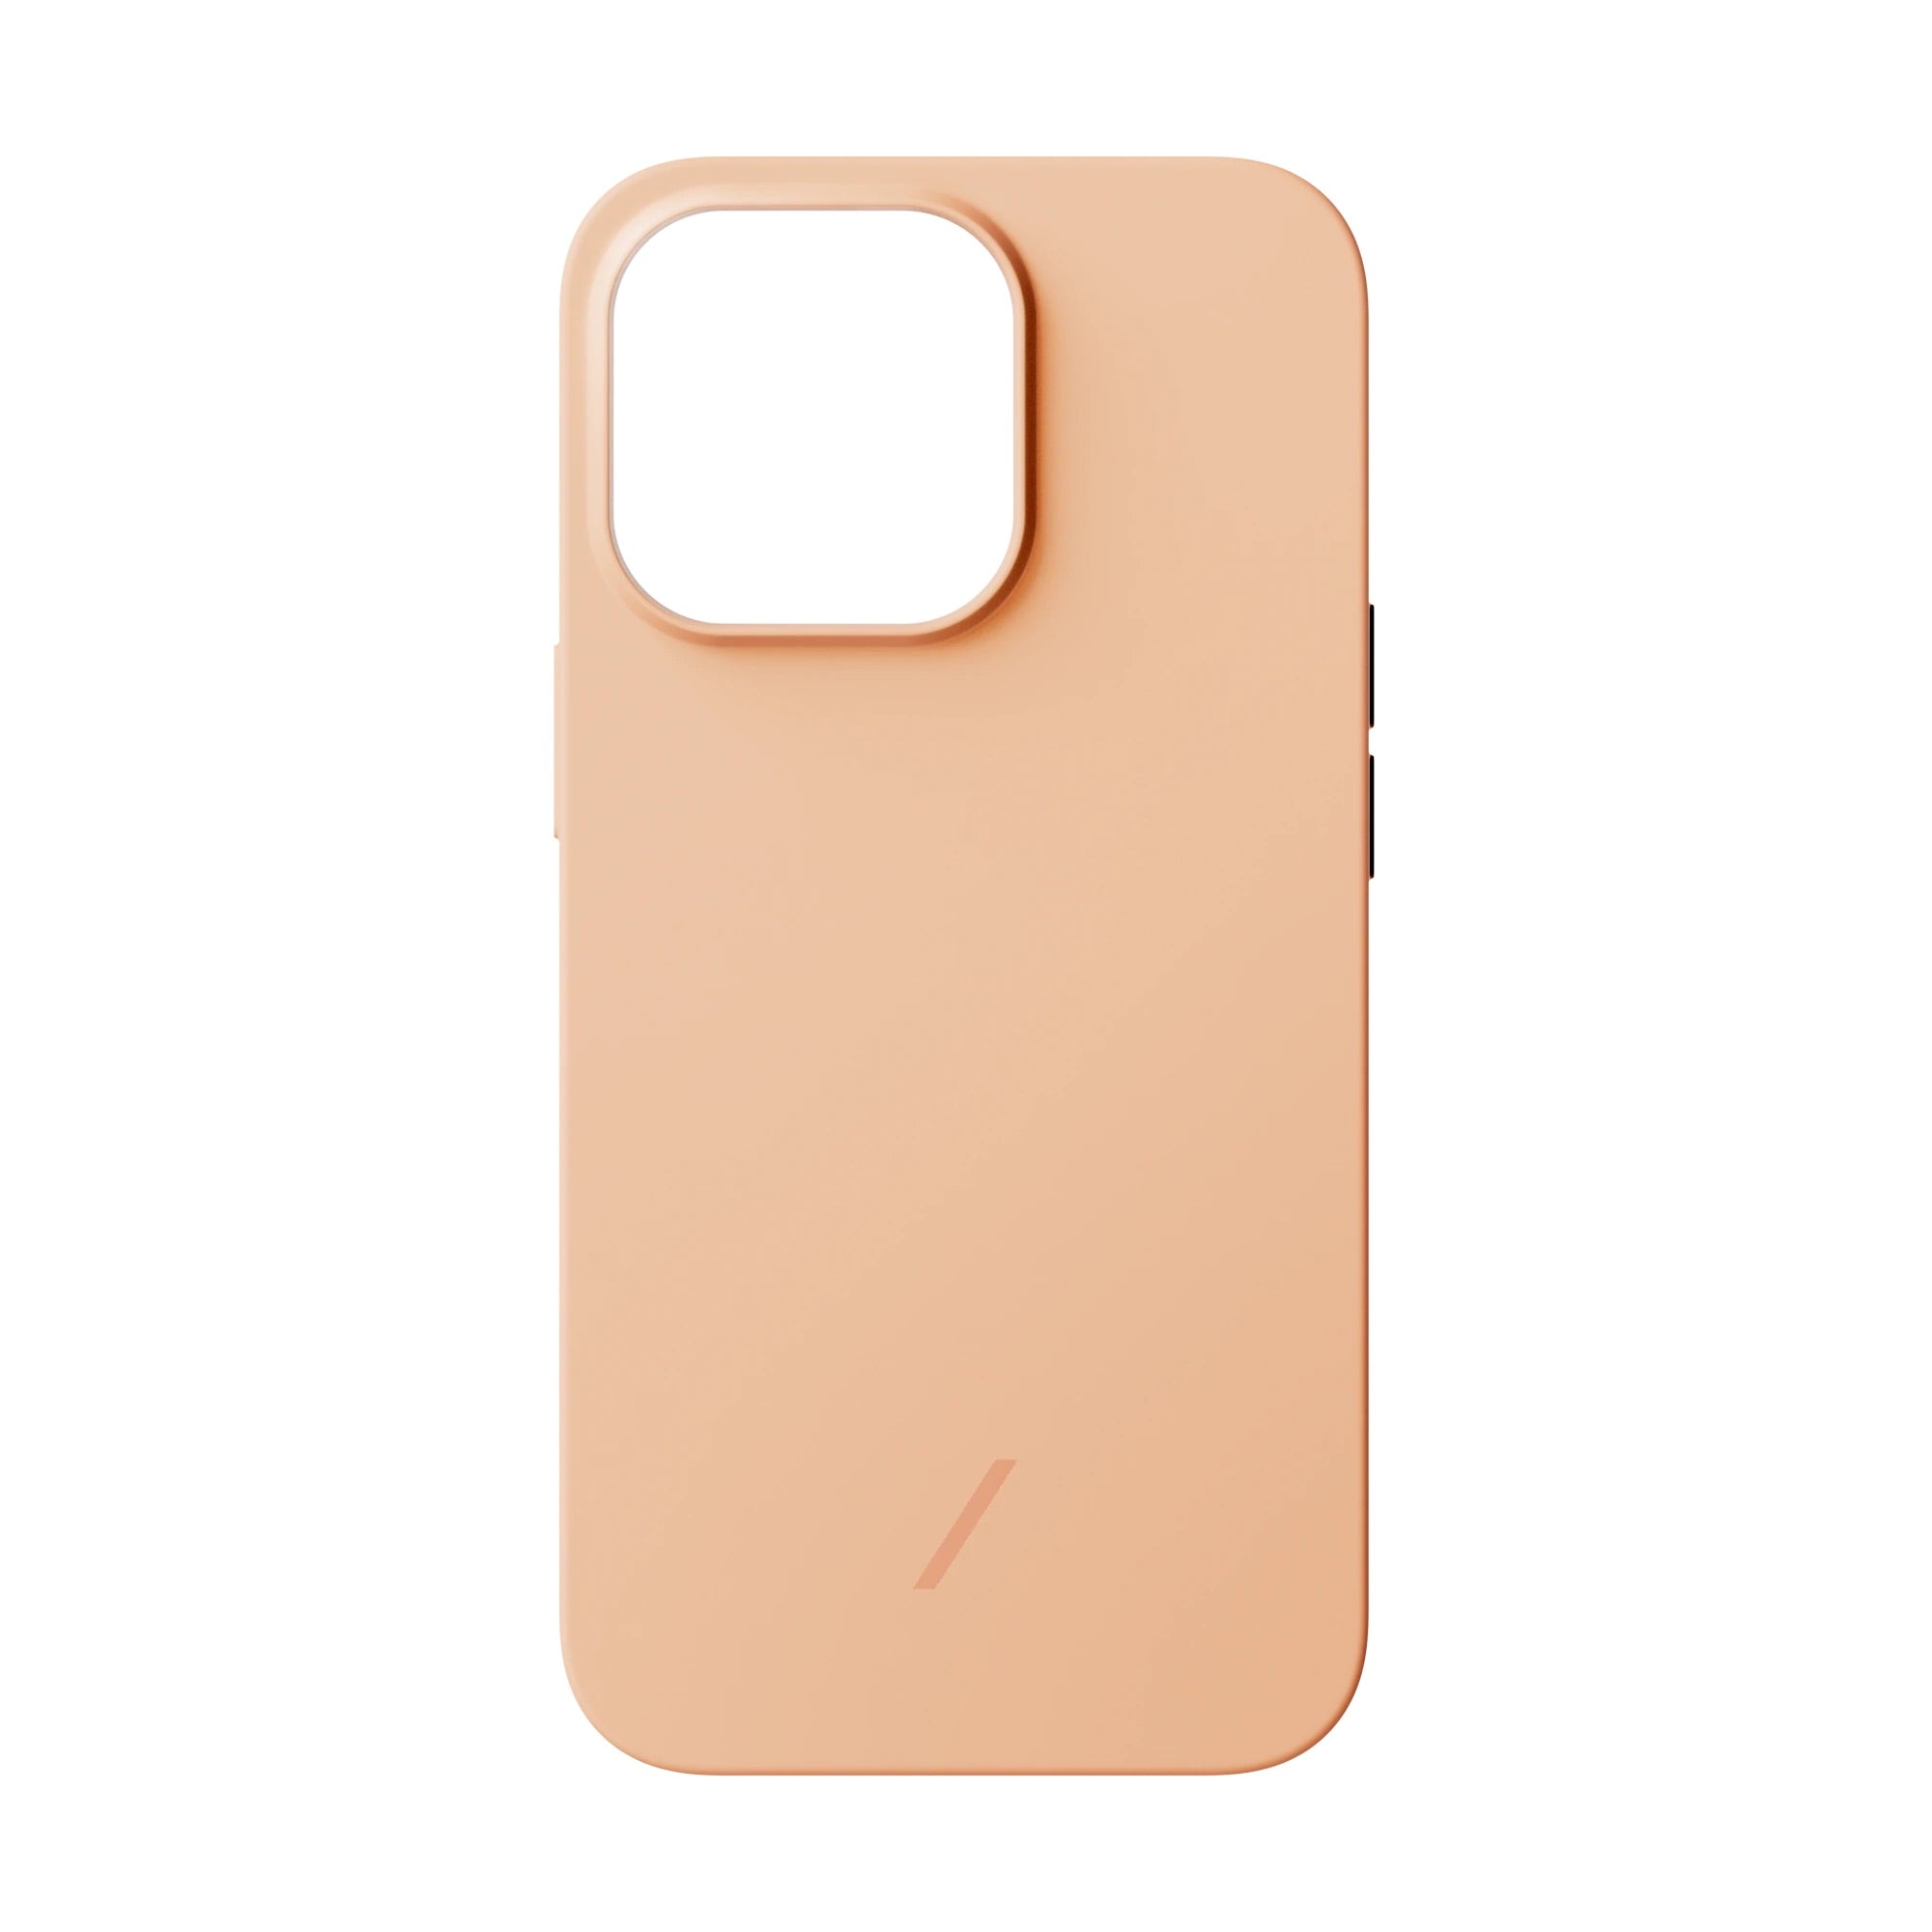 native-union-classic-magnetic-iphone-case-peach-iphone-13-pro